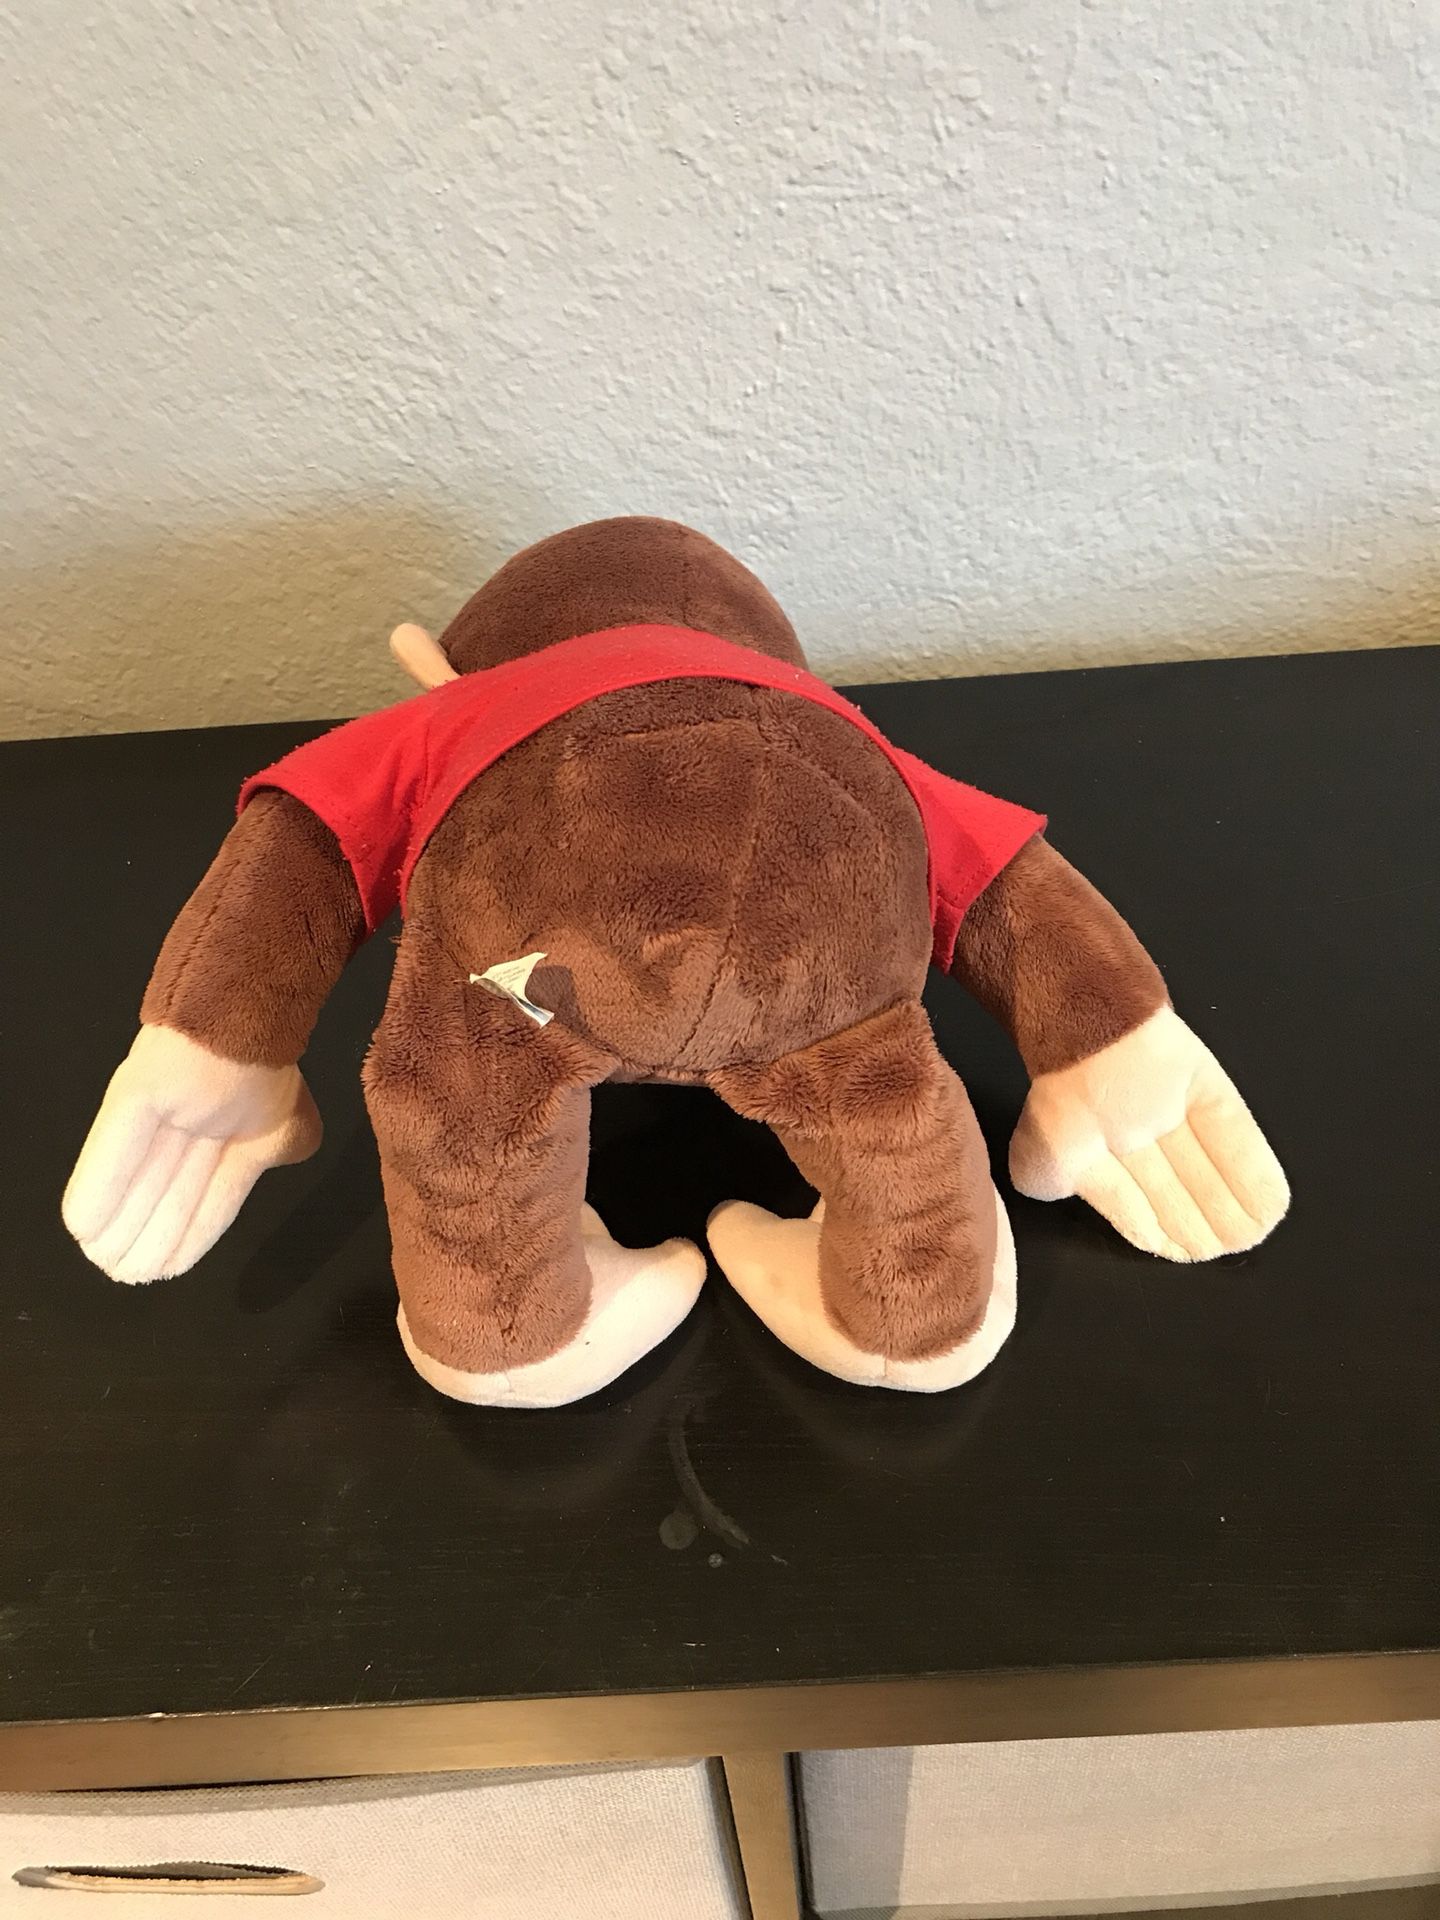 Curious George Monkey Large Classic Plush Stuffed Animal